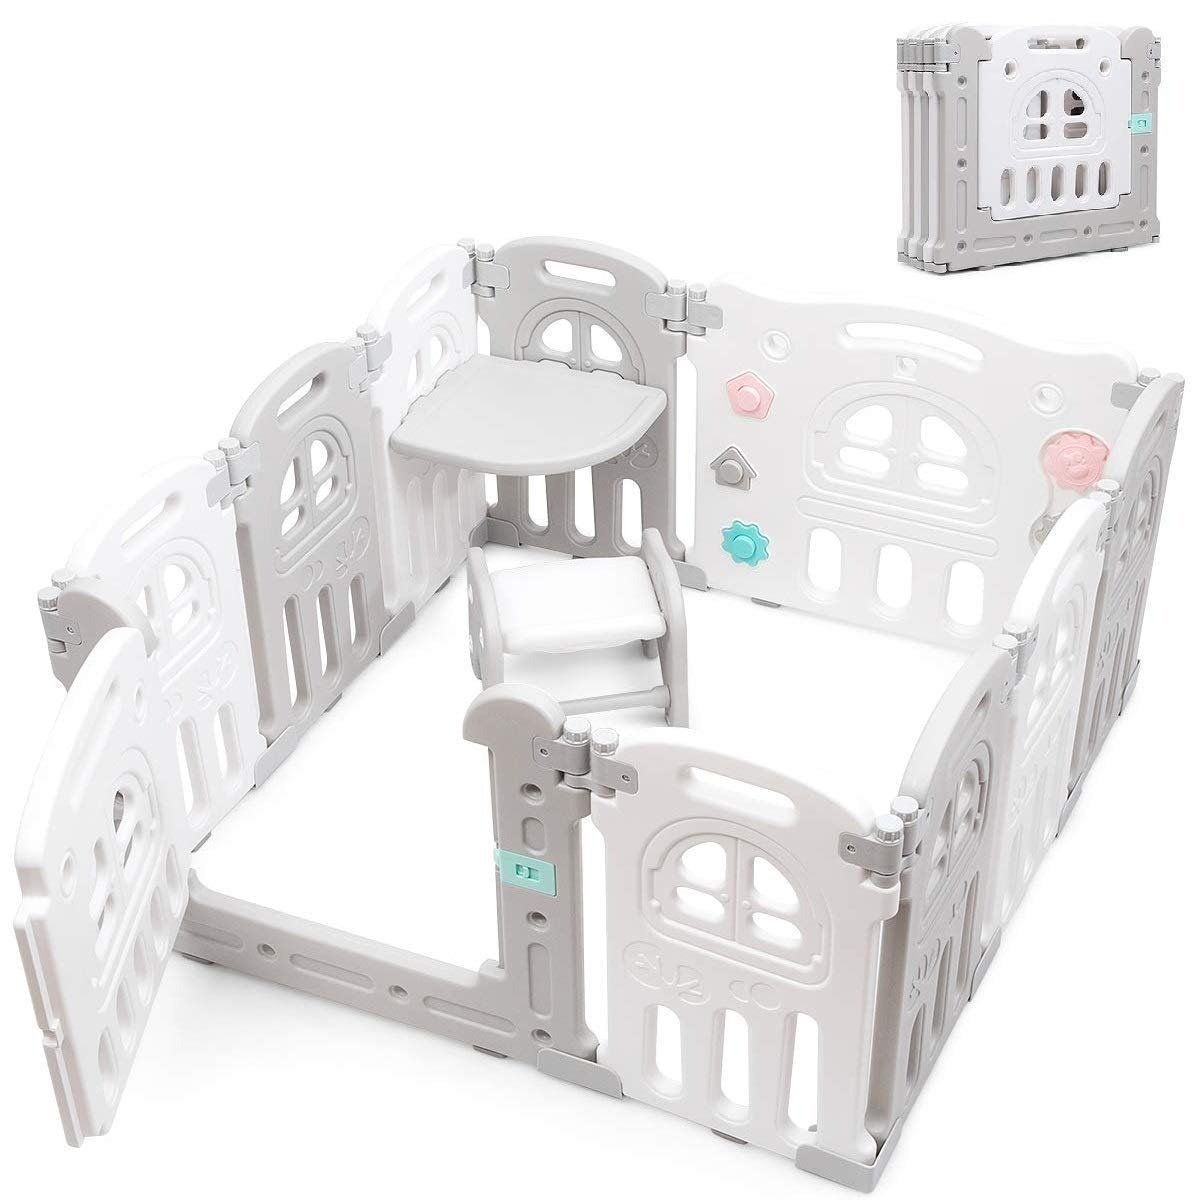 10-Panel Foldable Kids Playpen w/ Table & Stool (Gray & White) $60.80 + Free Shipping